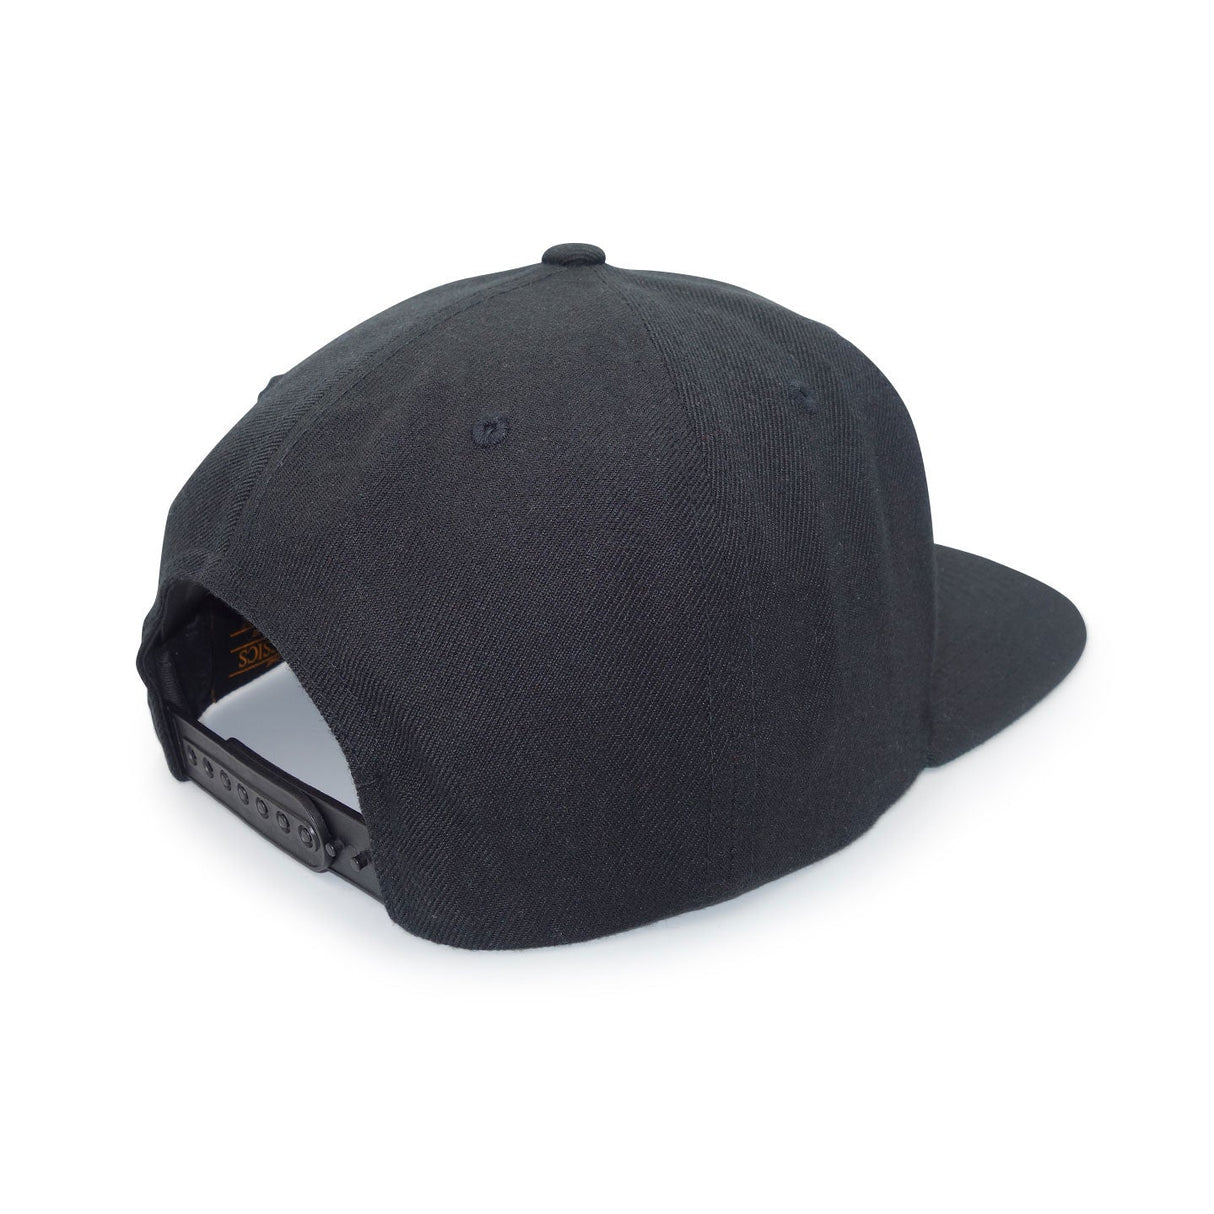 Canadian Made Black Flat Brim Snapback Hat